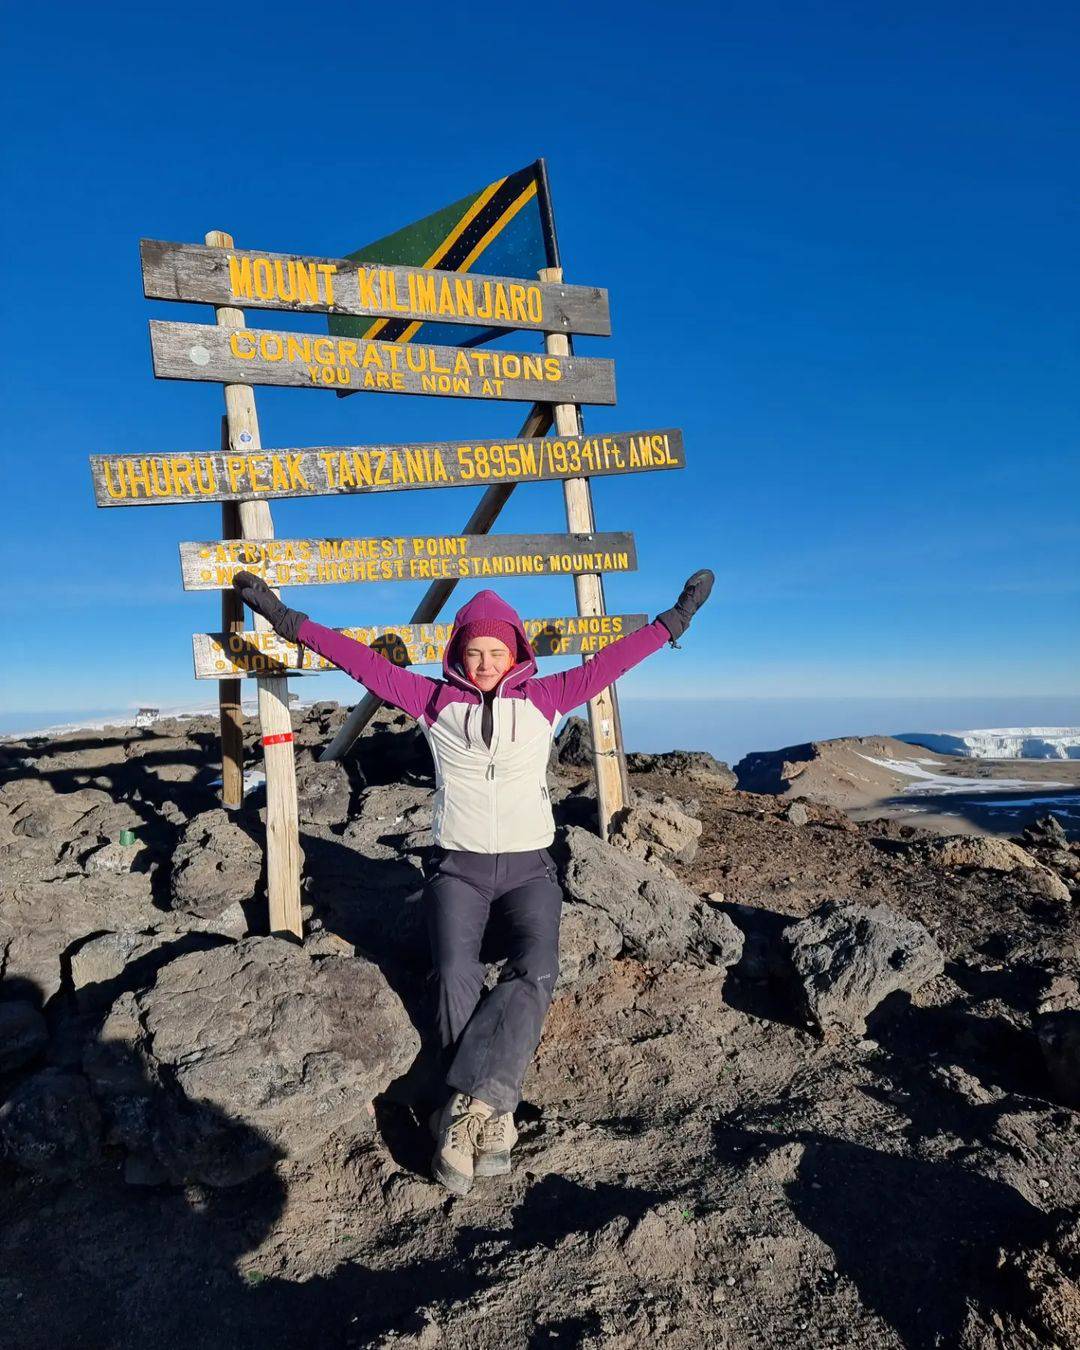 Doris Pinčić osvojila vrh Afrike: Popela se na Kilimandžaro